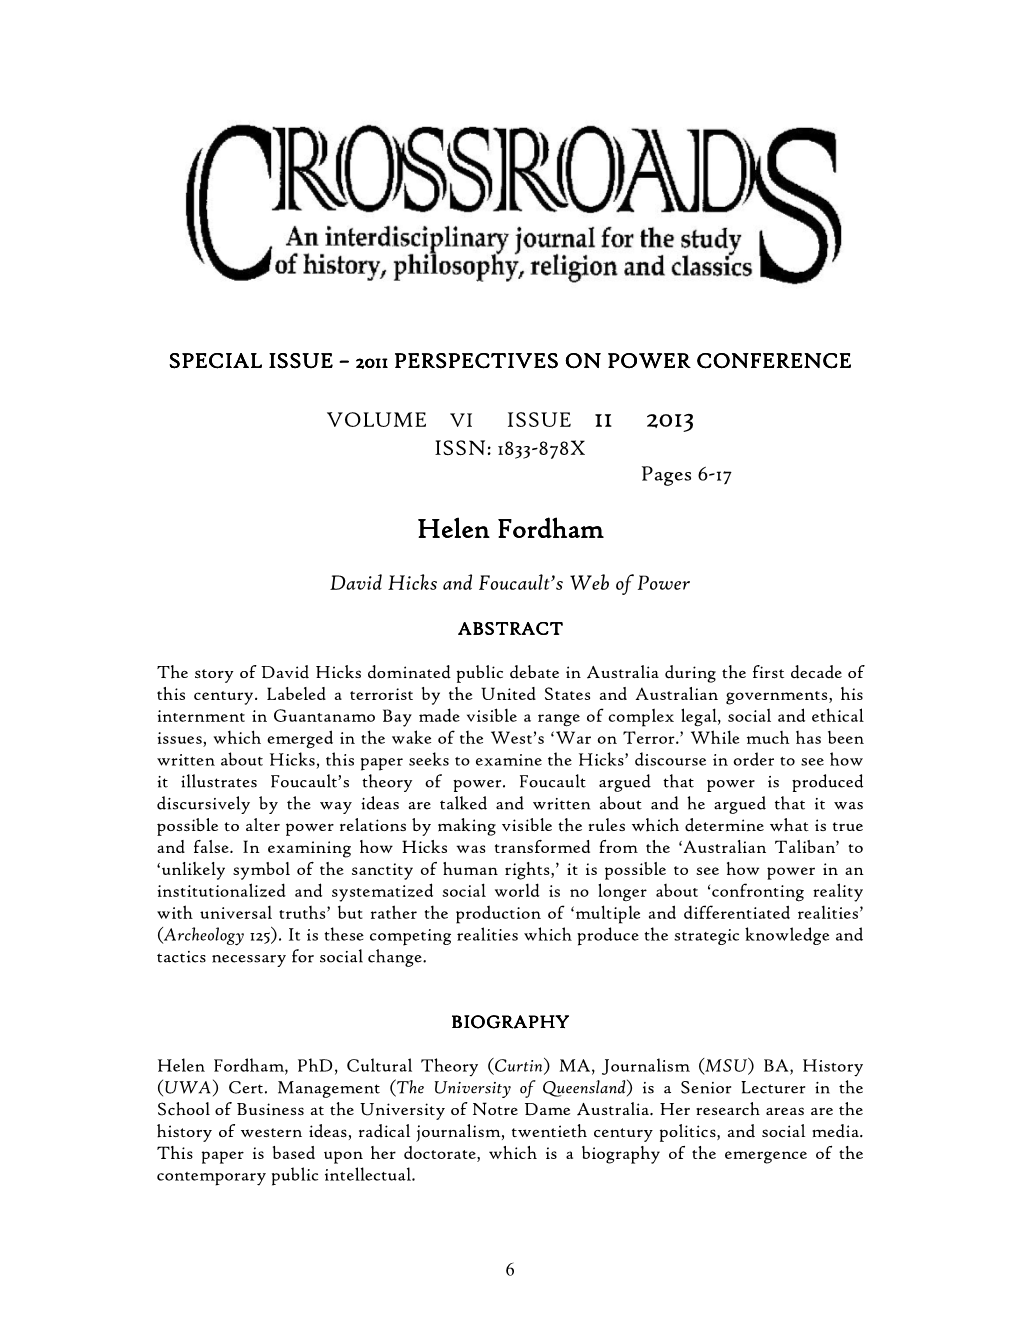 David Hicks and Foucault's Web of Power